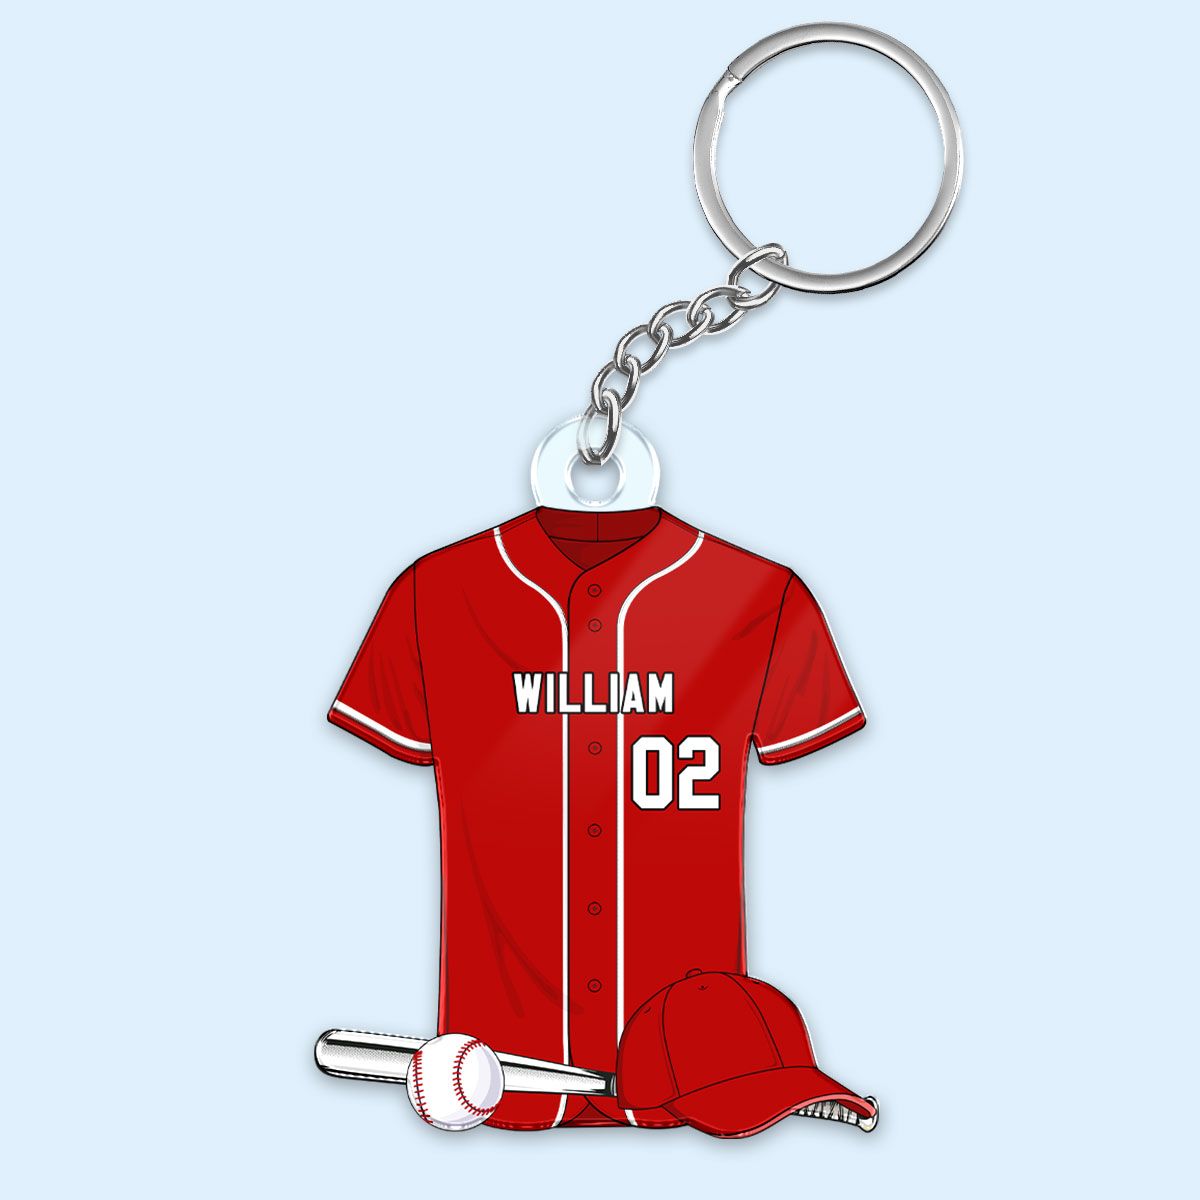 Baseball Shirt Personalized Acrylic Keychain, Gift For Son, Husband